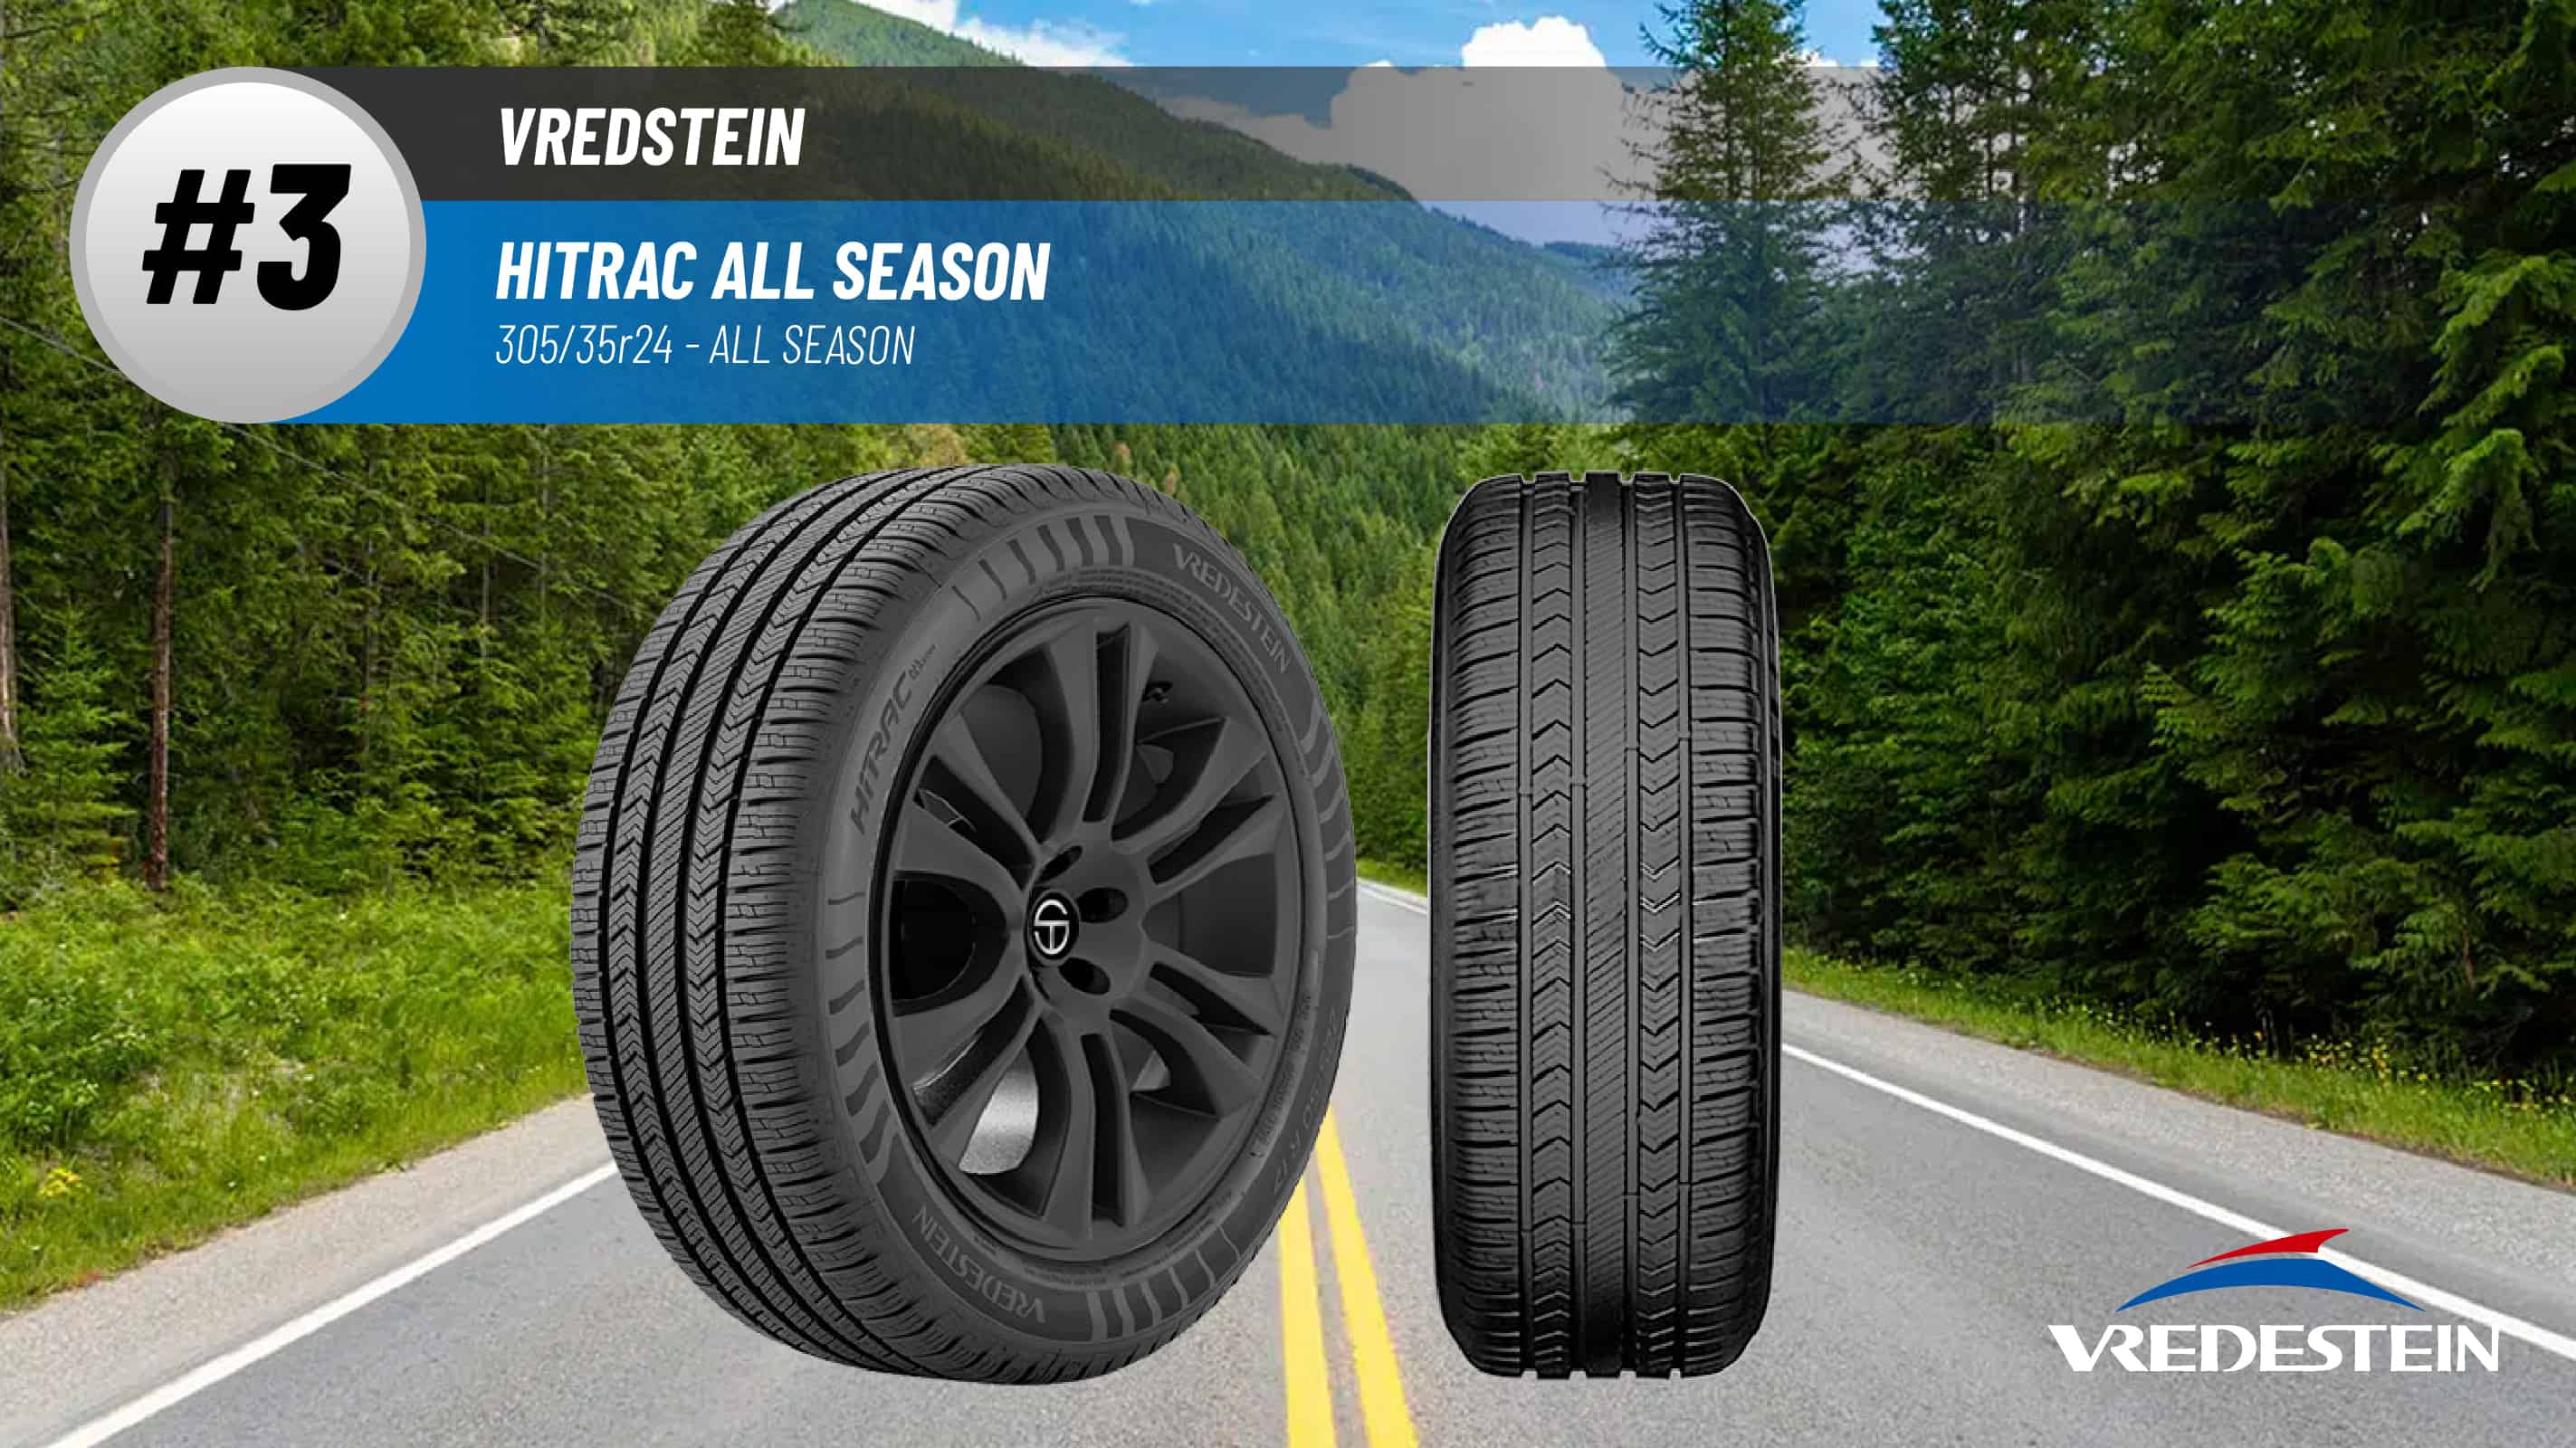 Top #3 All Season Tires: Vredstein Hitrac All Season – 305/35R24